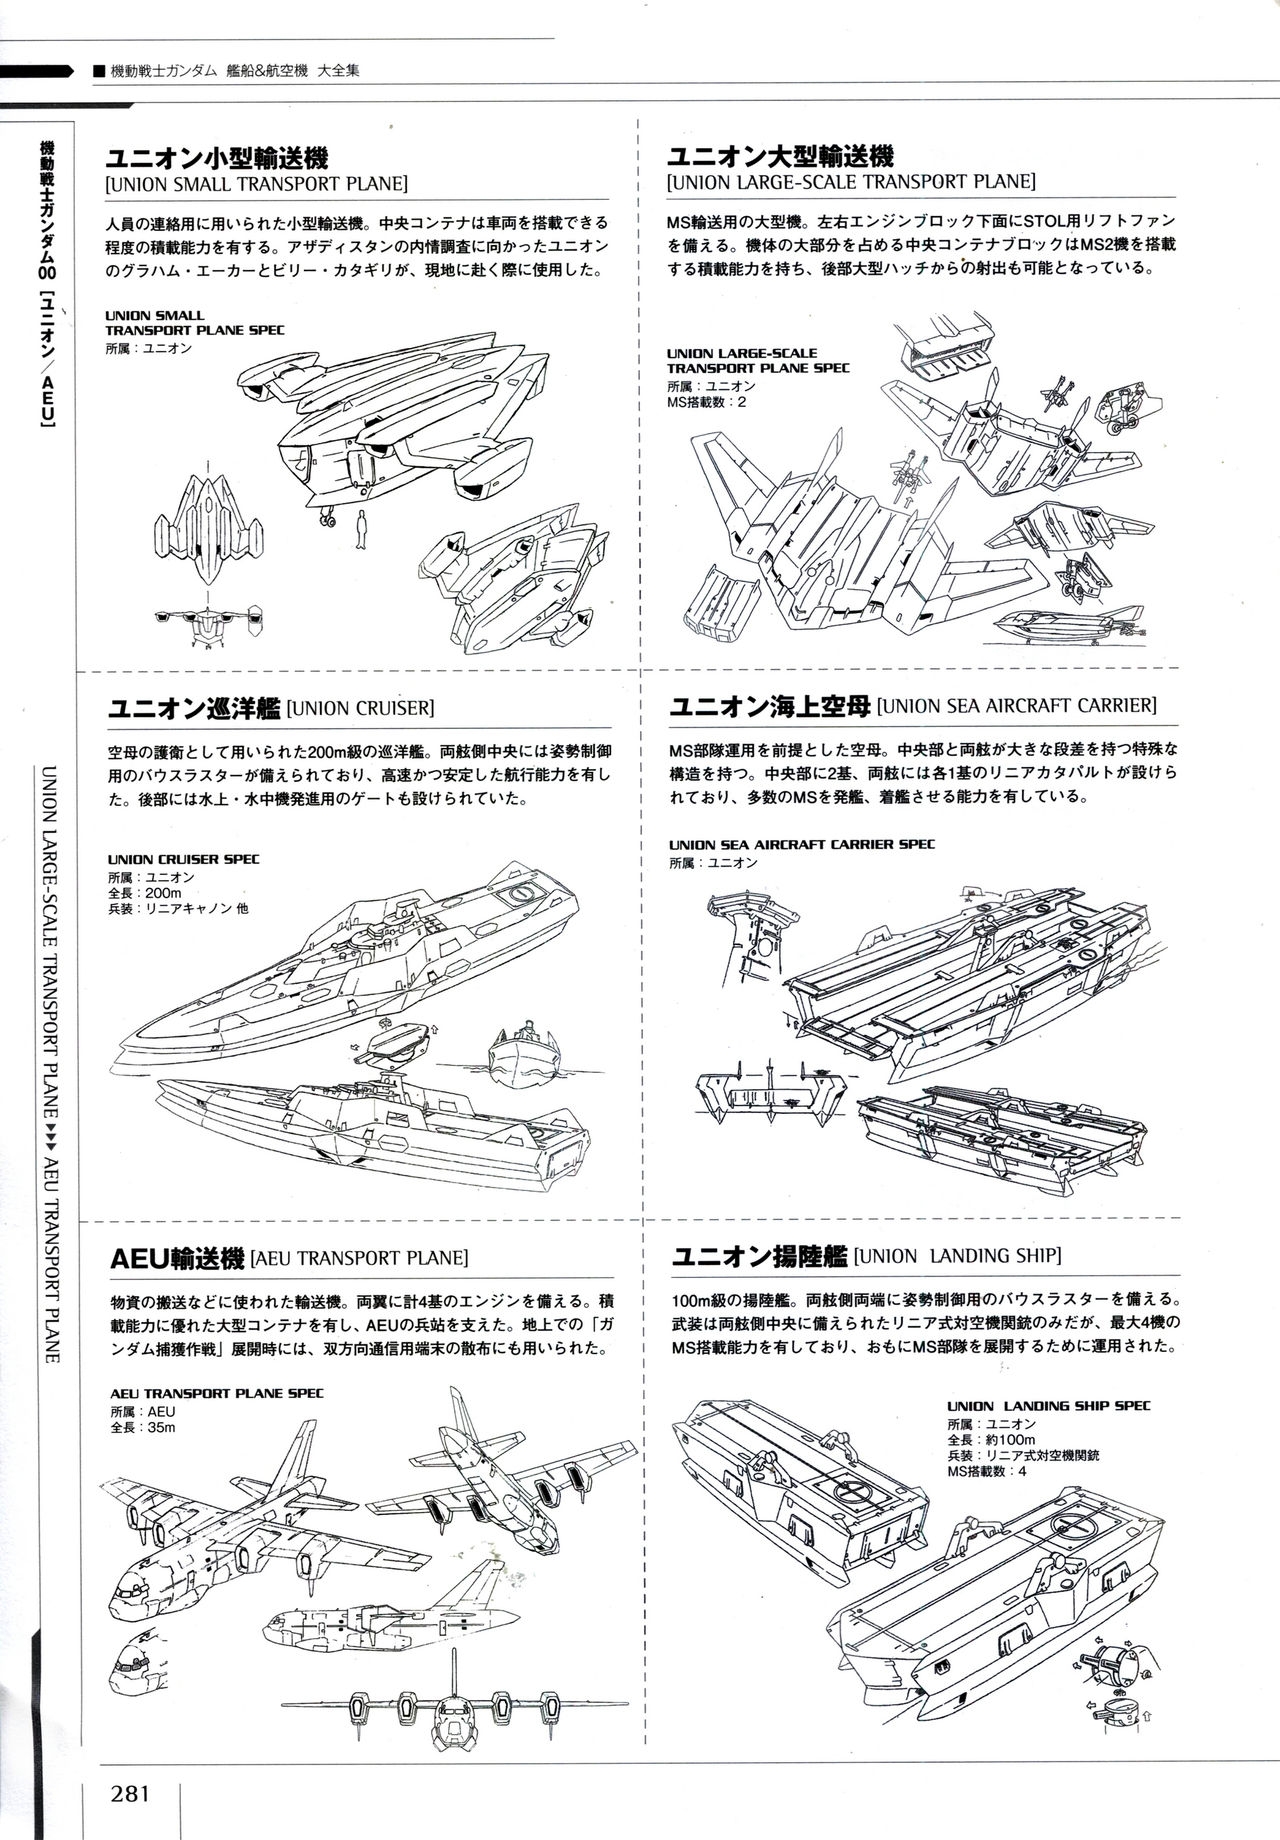 Mobile Suit Gundam - Ship & Aerospace Plane Encyclopedia - Revised Edition 286